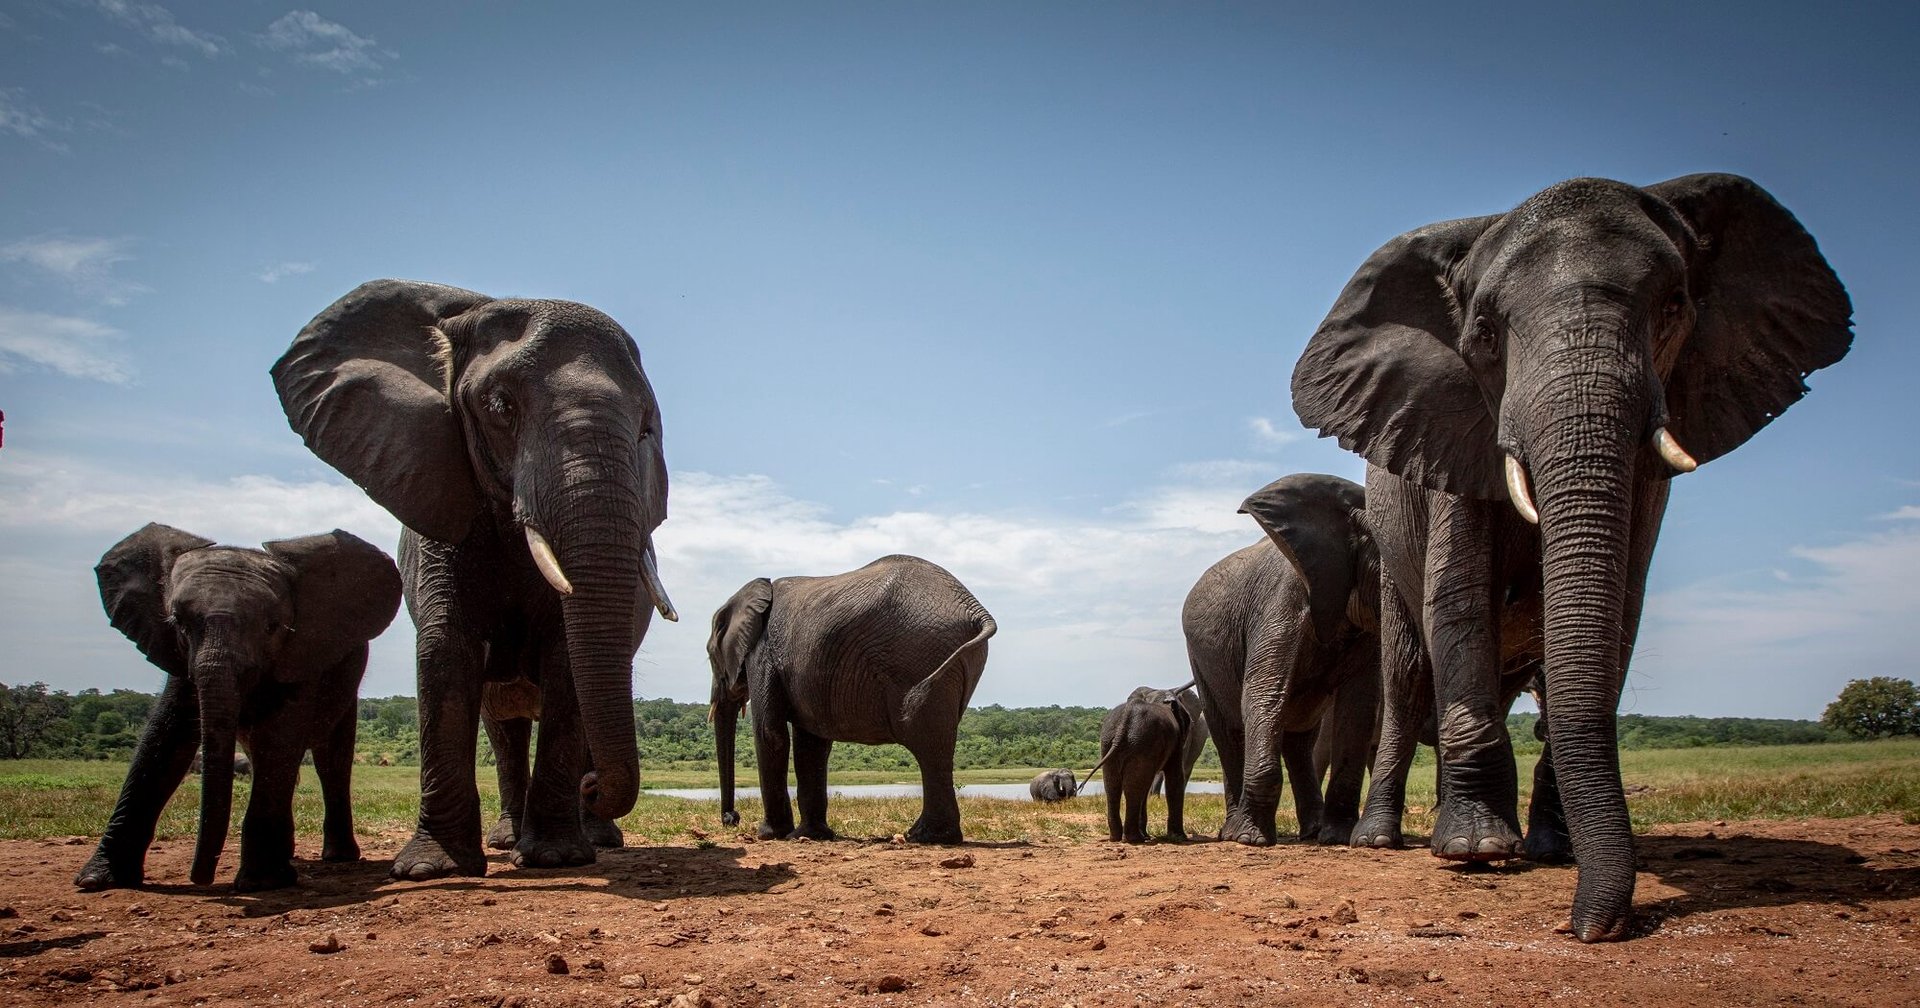 Wild elephants in a row at Hwange National Park, Zimbabwe. Credit: World Animal Protection / Aaron Gekoski